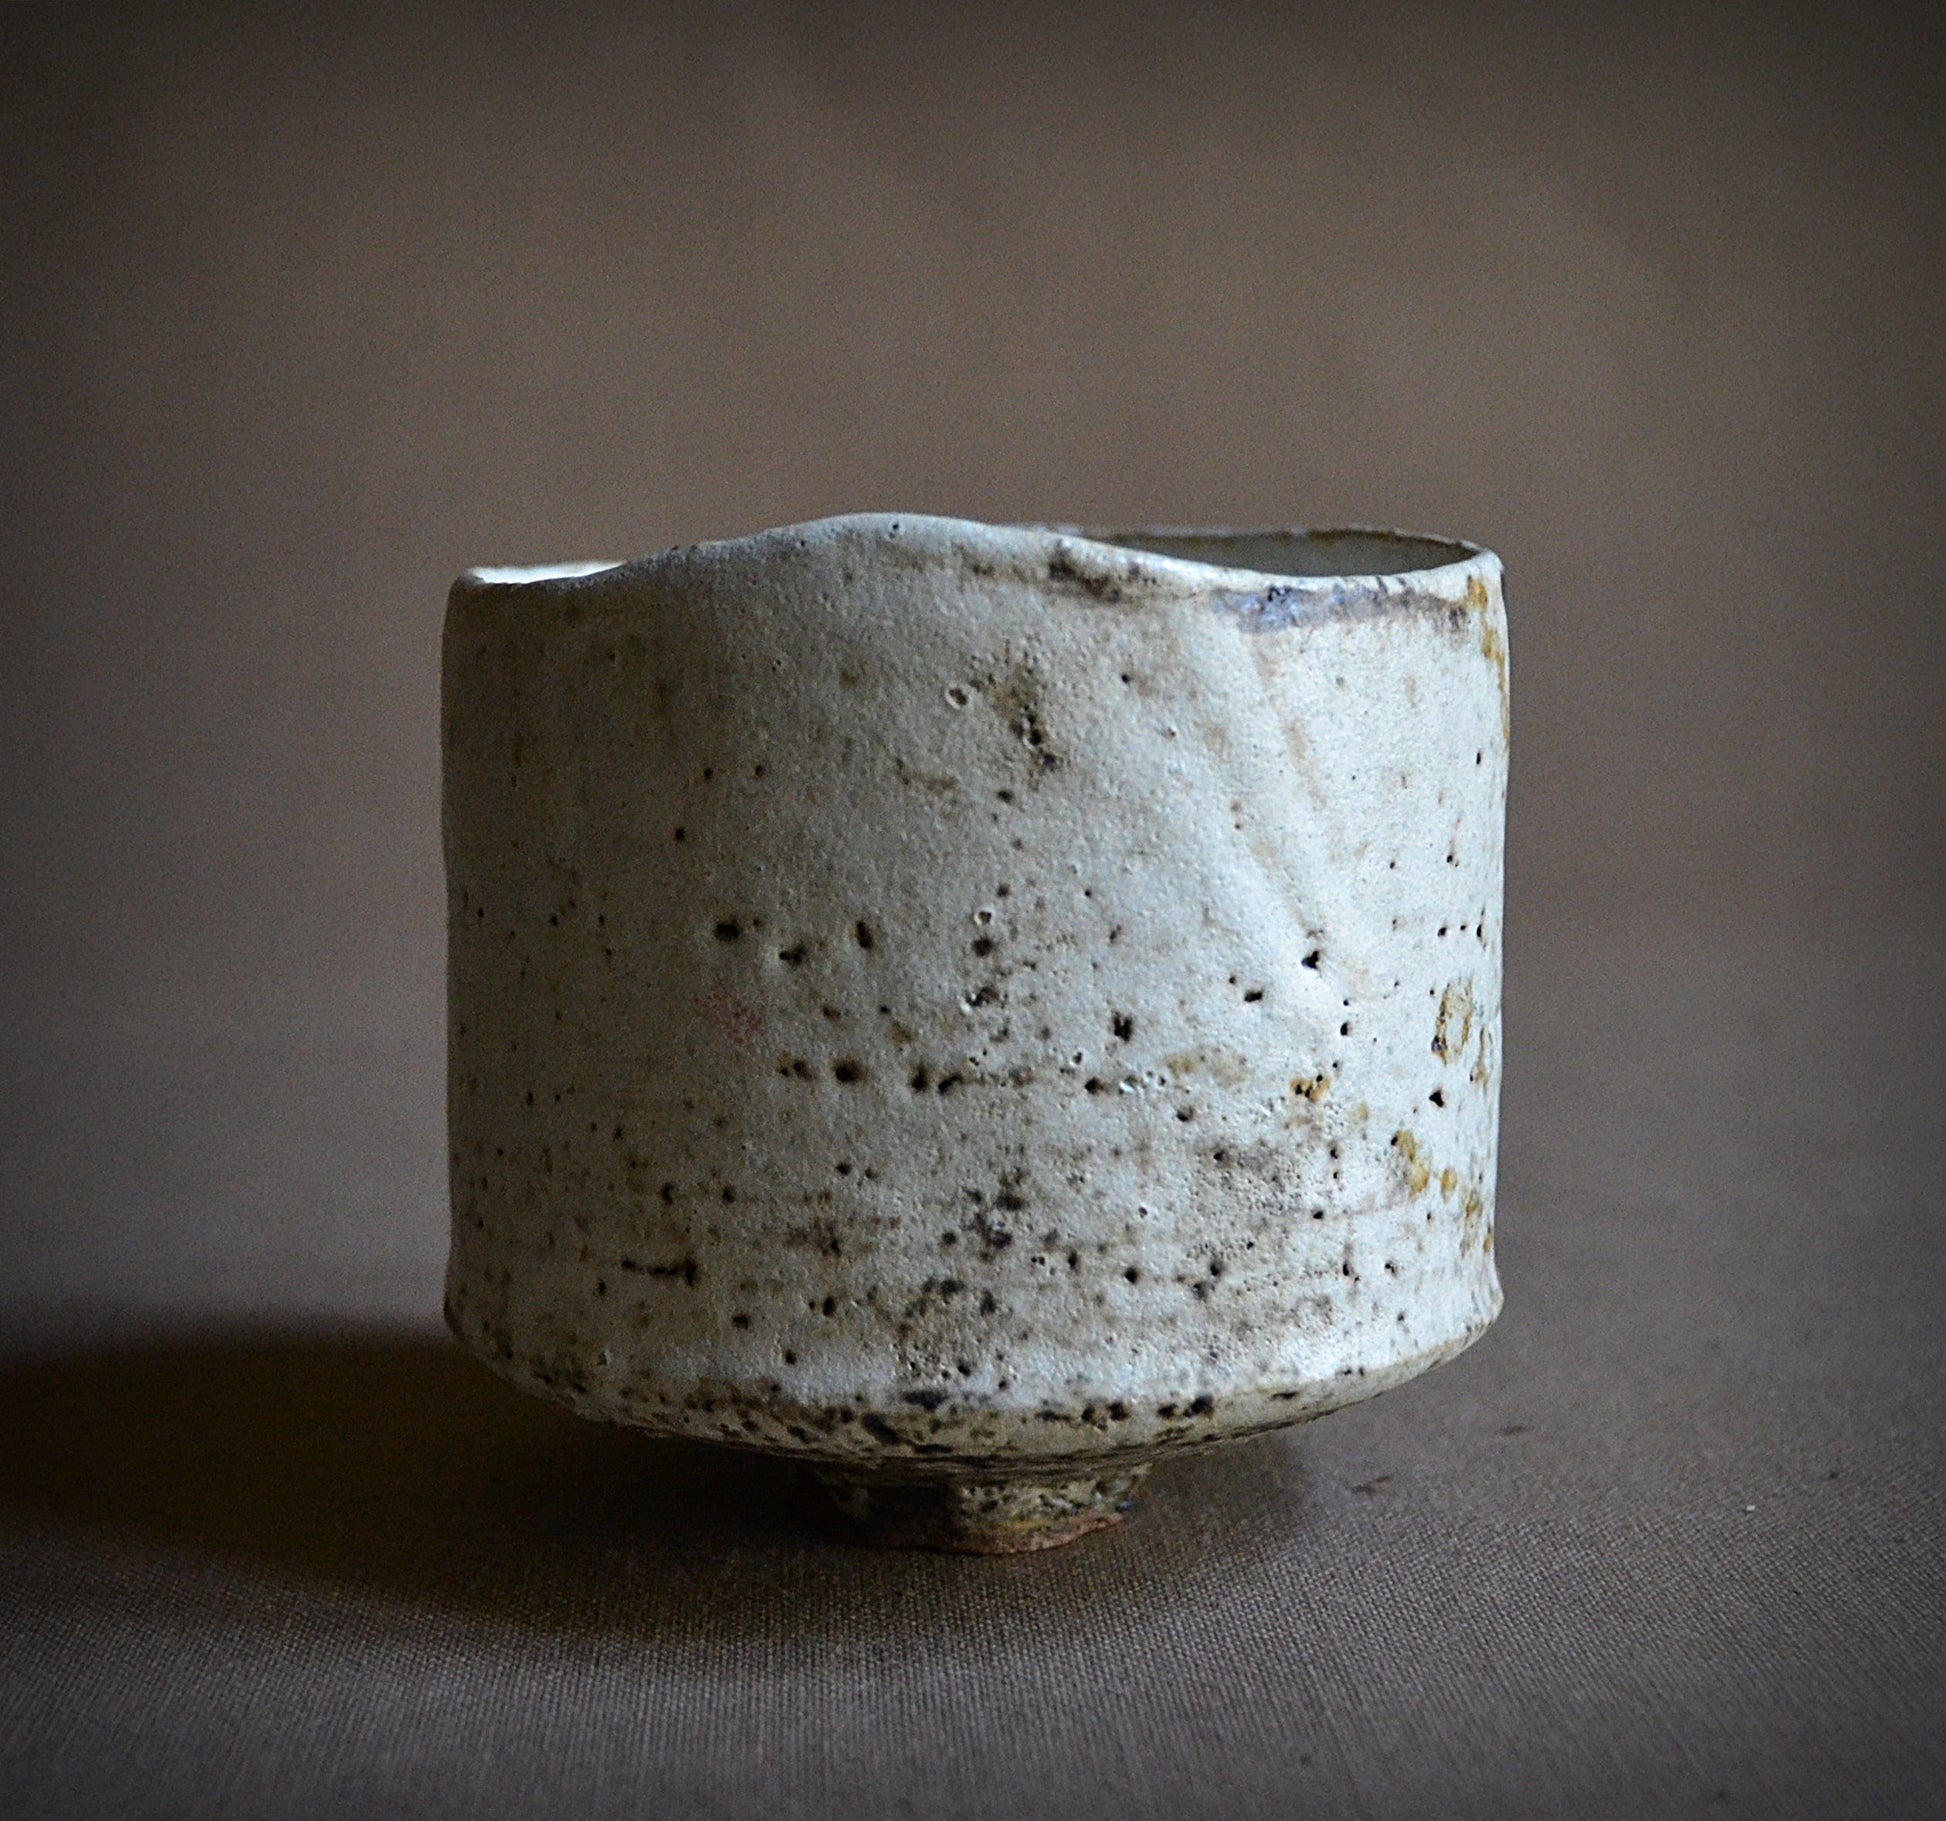 Chawan Ceramic Tea Cup No. 4 by Propeler Studio Tea Cup